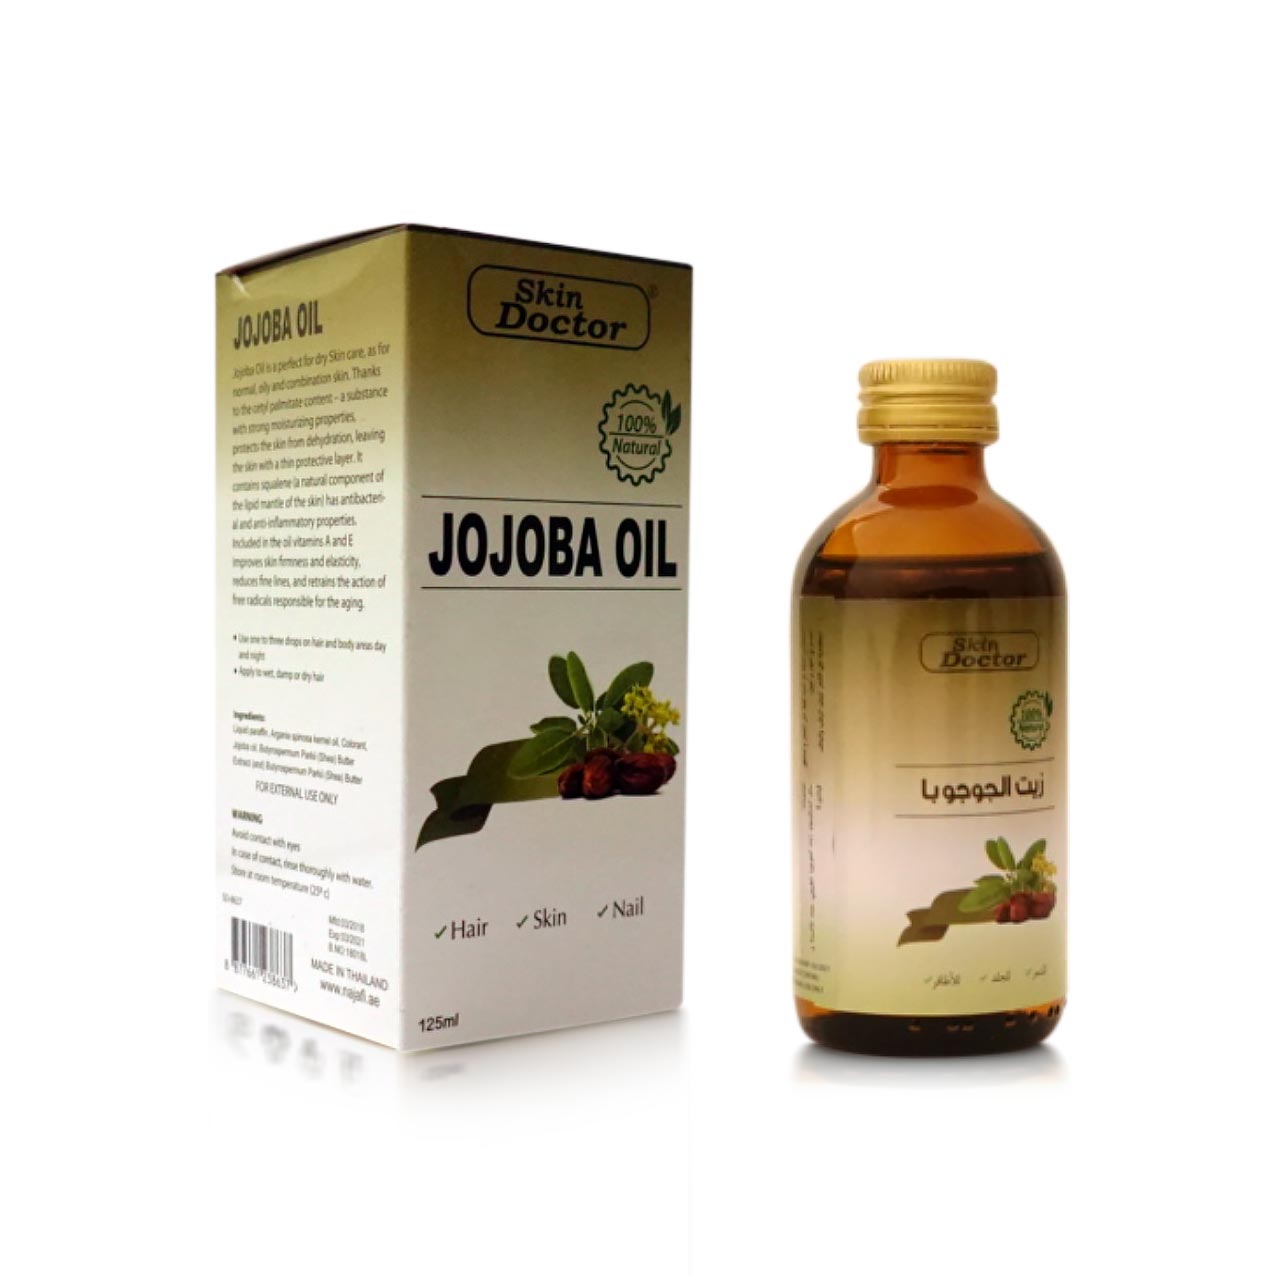 44-8877661238637-SD-8637 -Skin Doctor Hair _ Skin Oil Jojoba 125ml 1